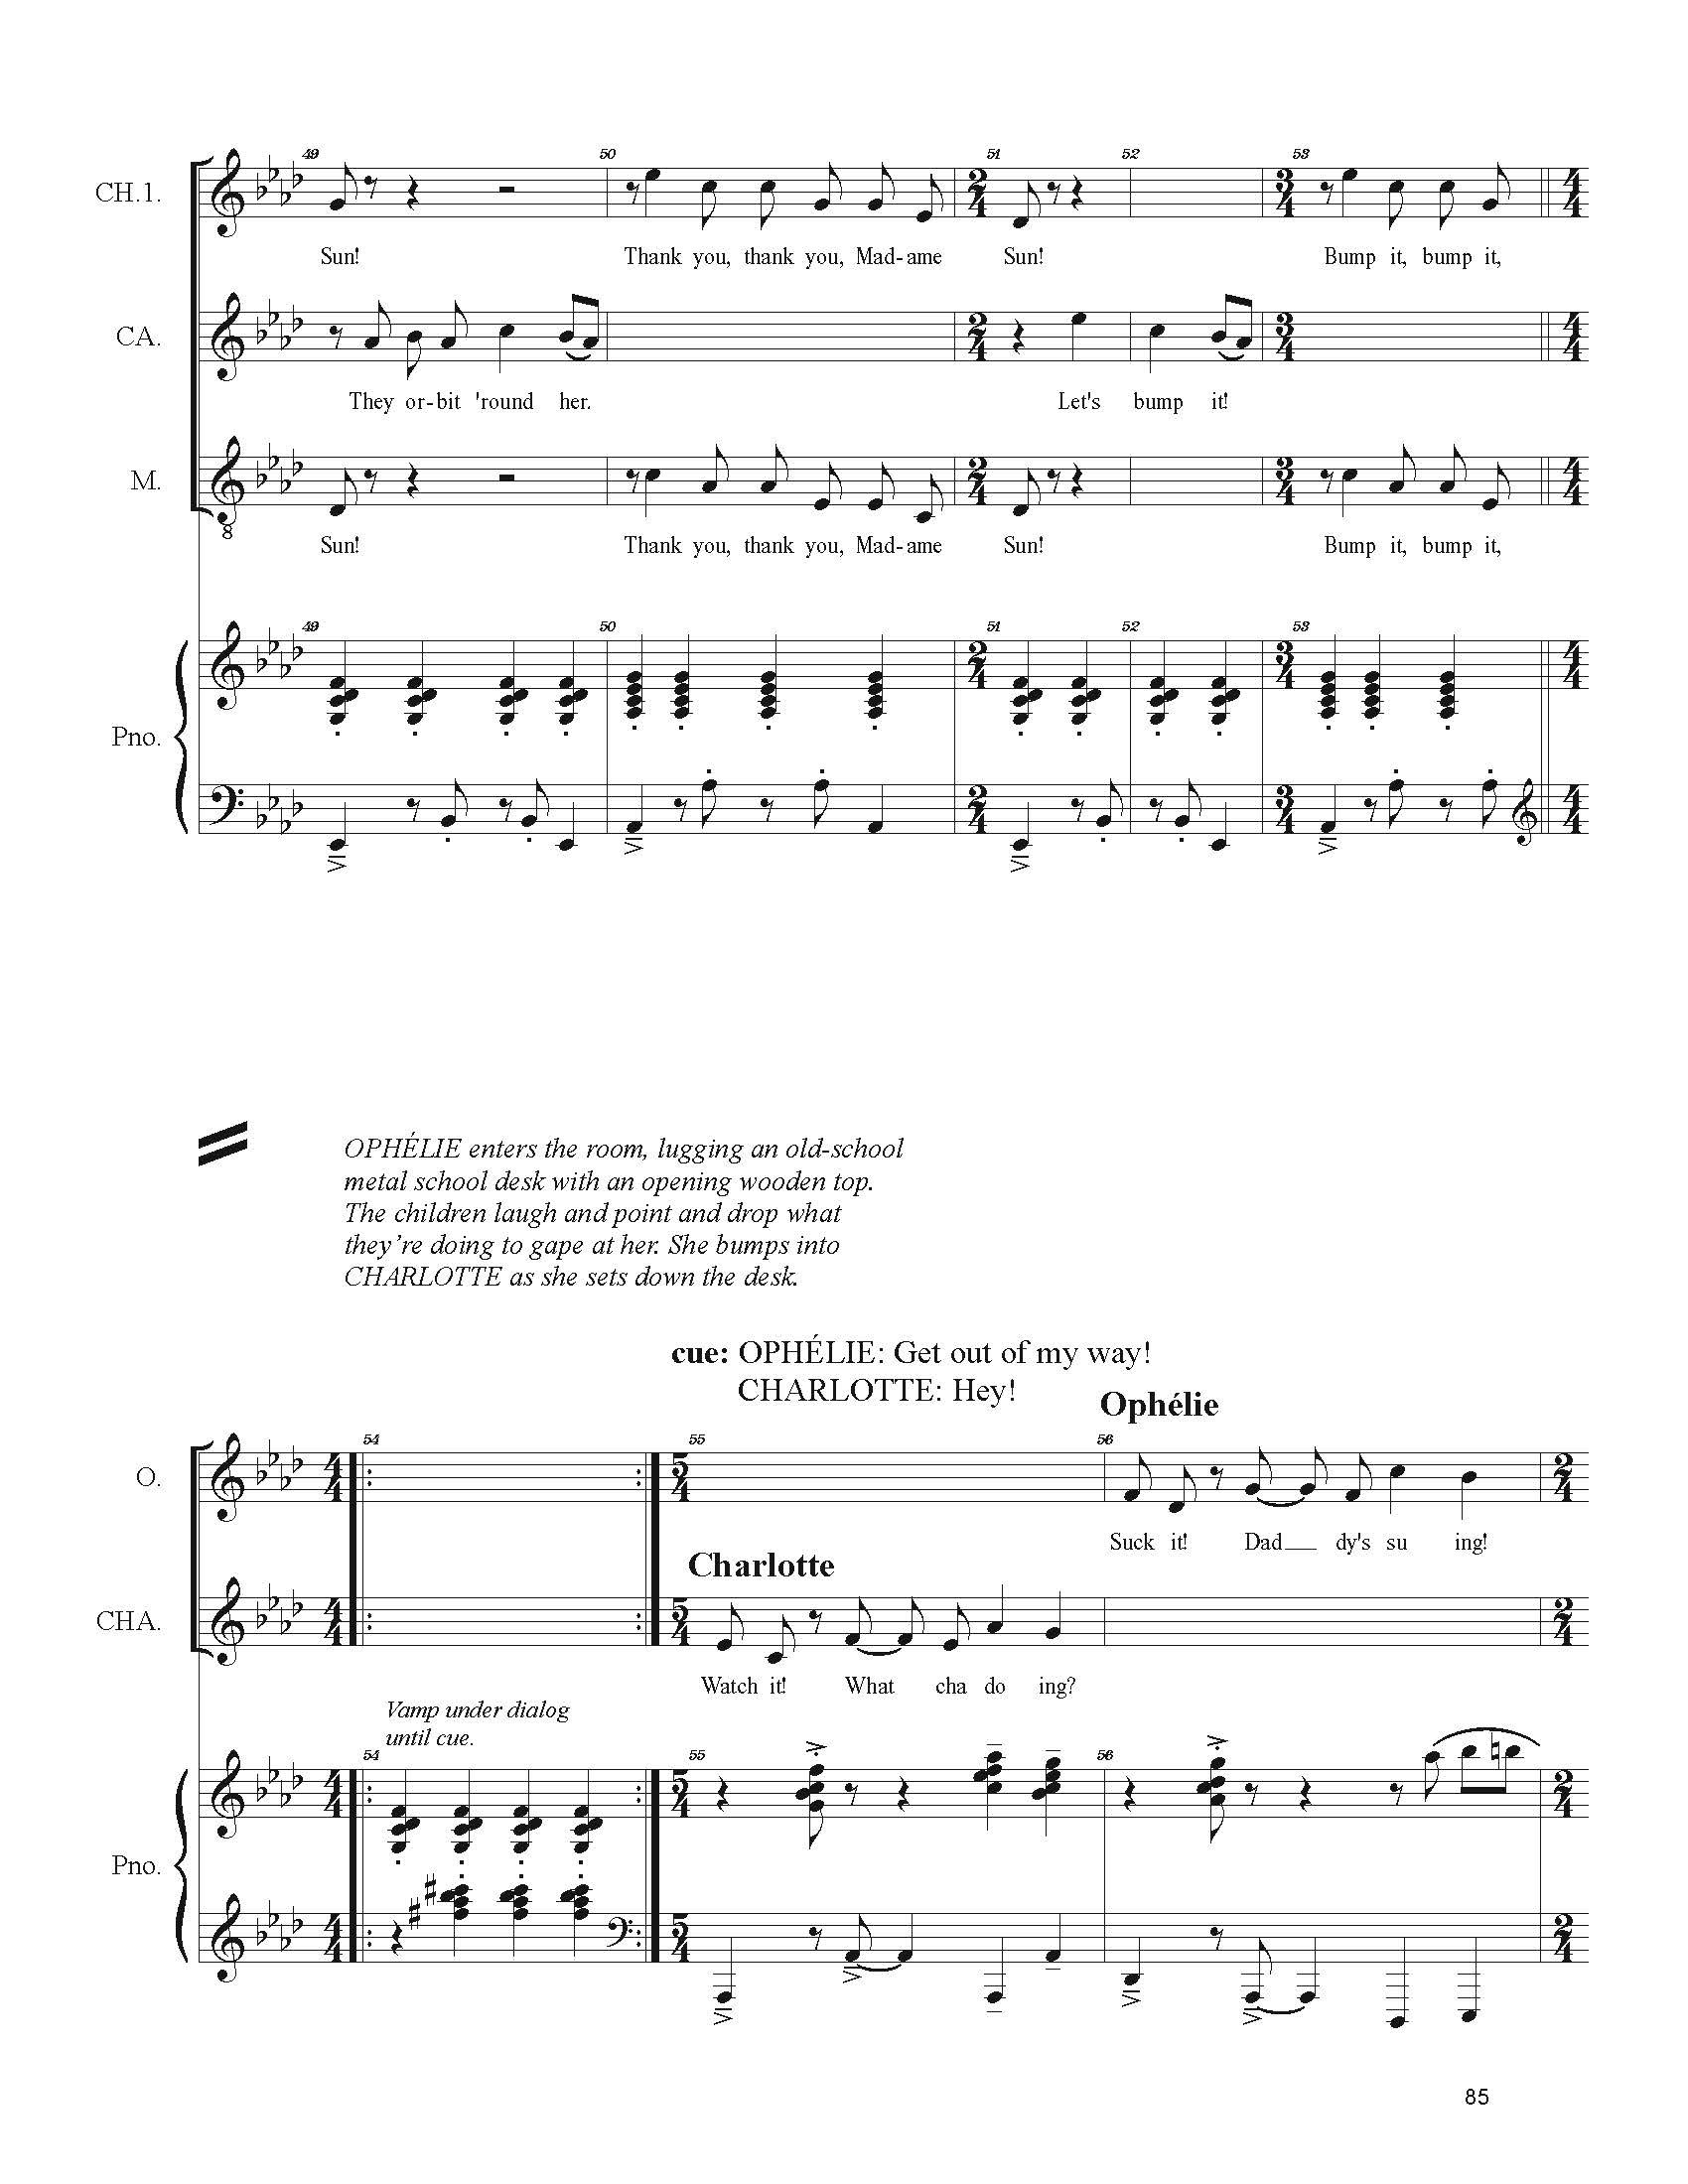 FULL PIANO VOCAL SCORE DRAFT 1 - Score_Page_085.jpg